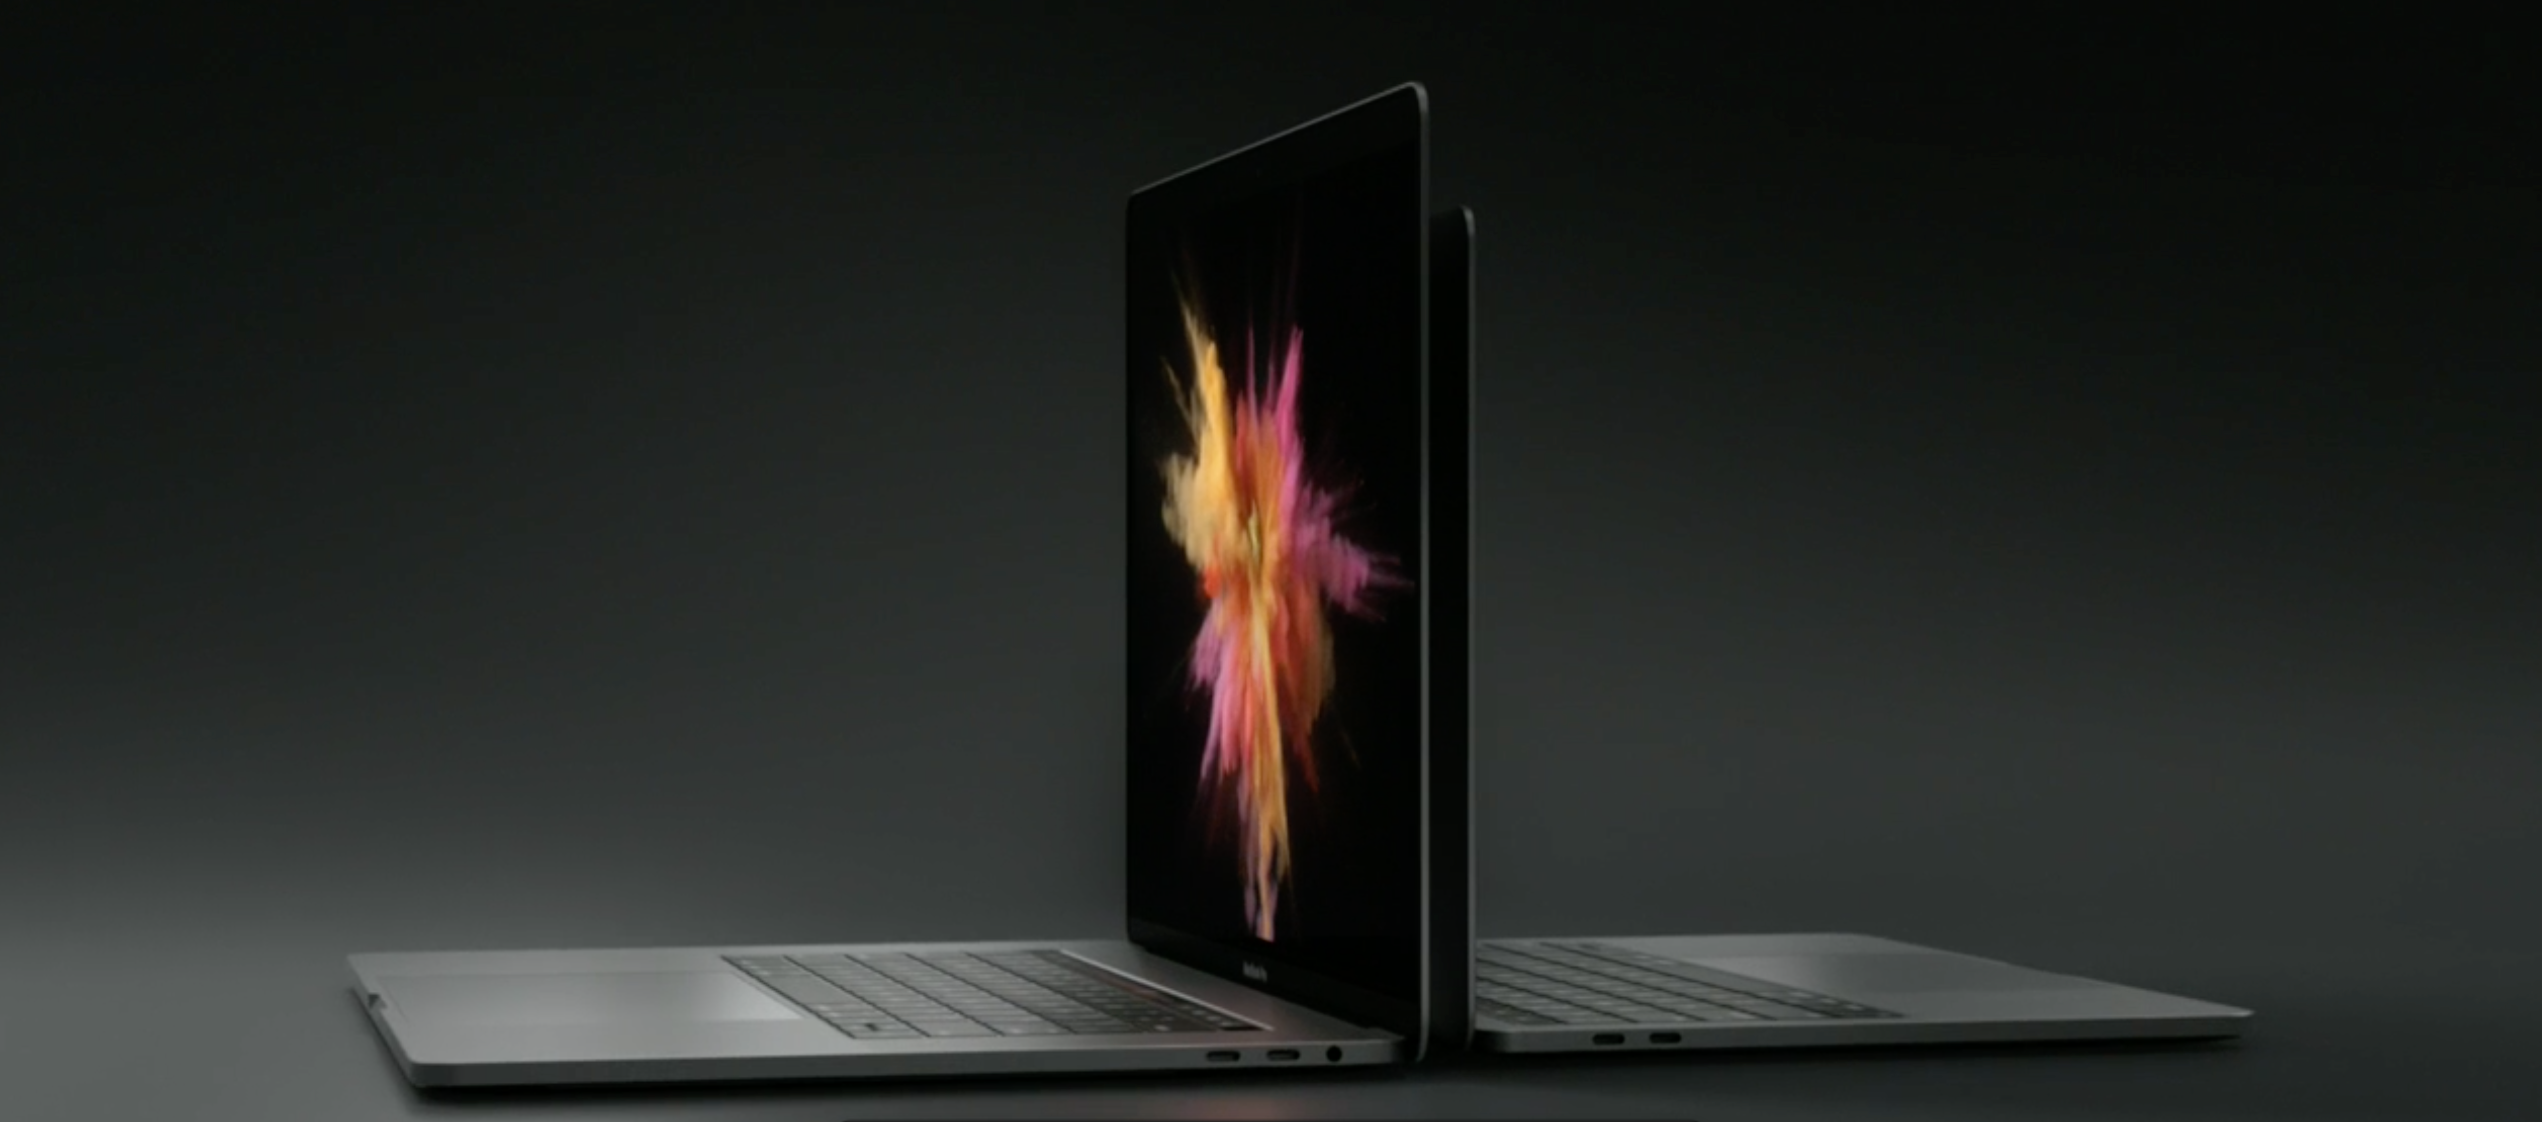 Slik ser nye MacBook Pro ut.